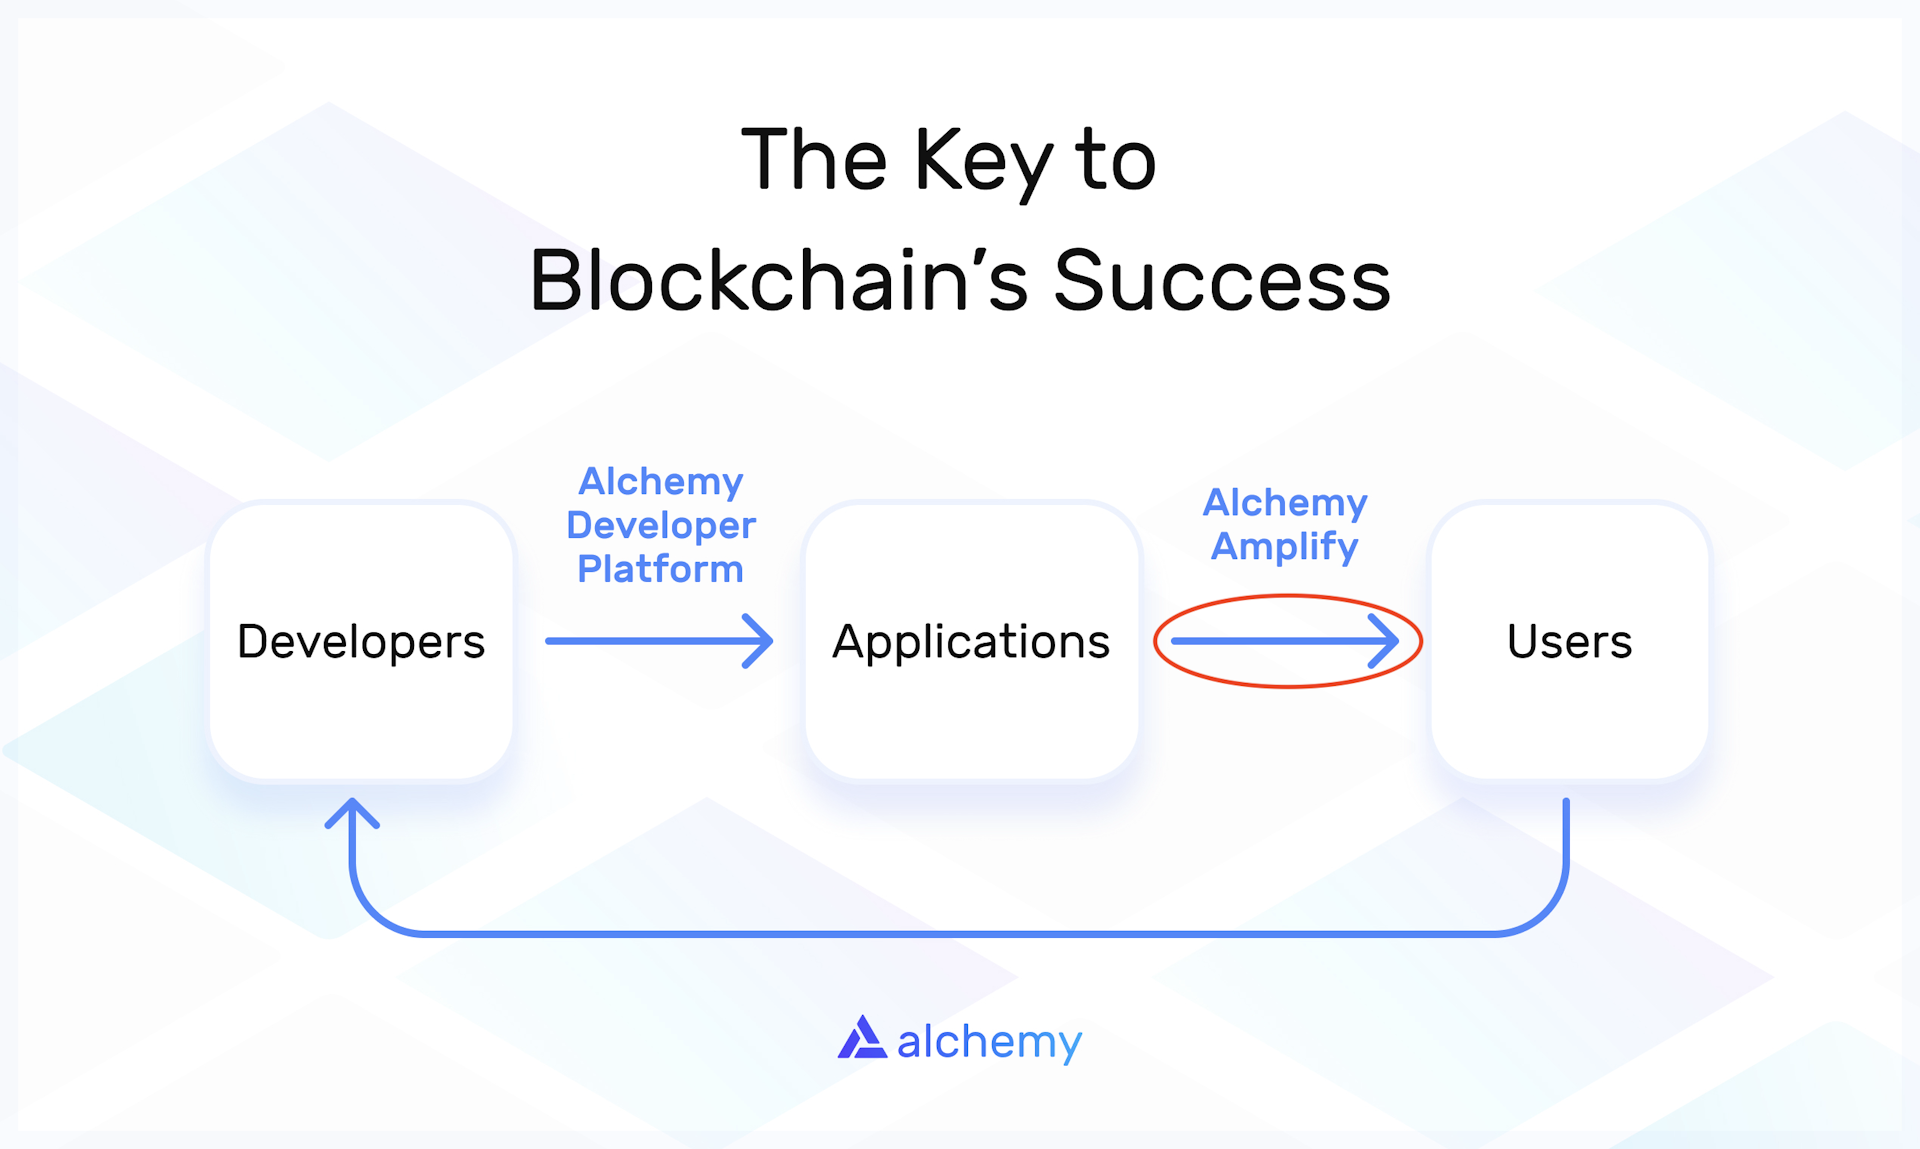 Flowchart explaining the key to Blockchain's success